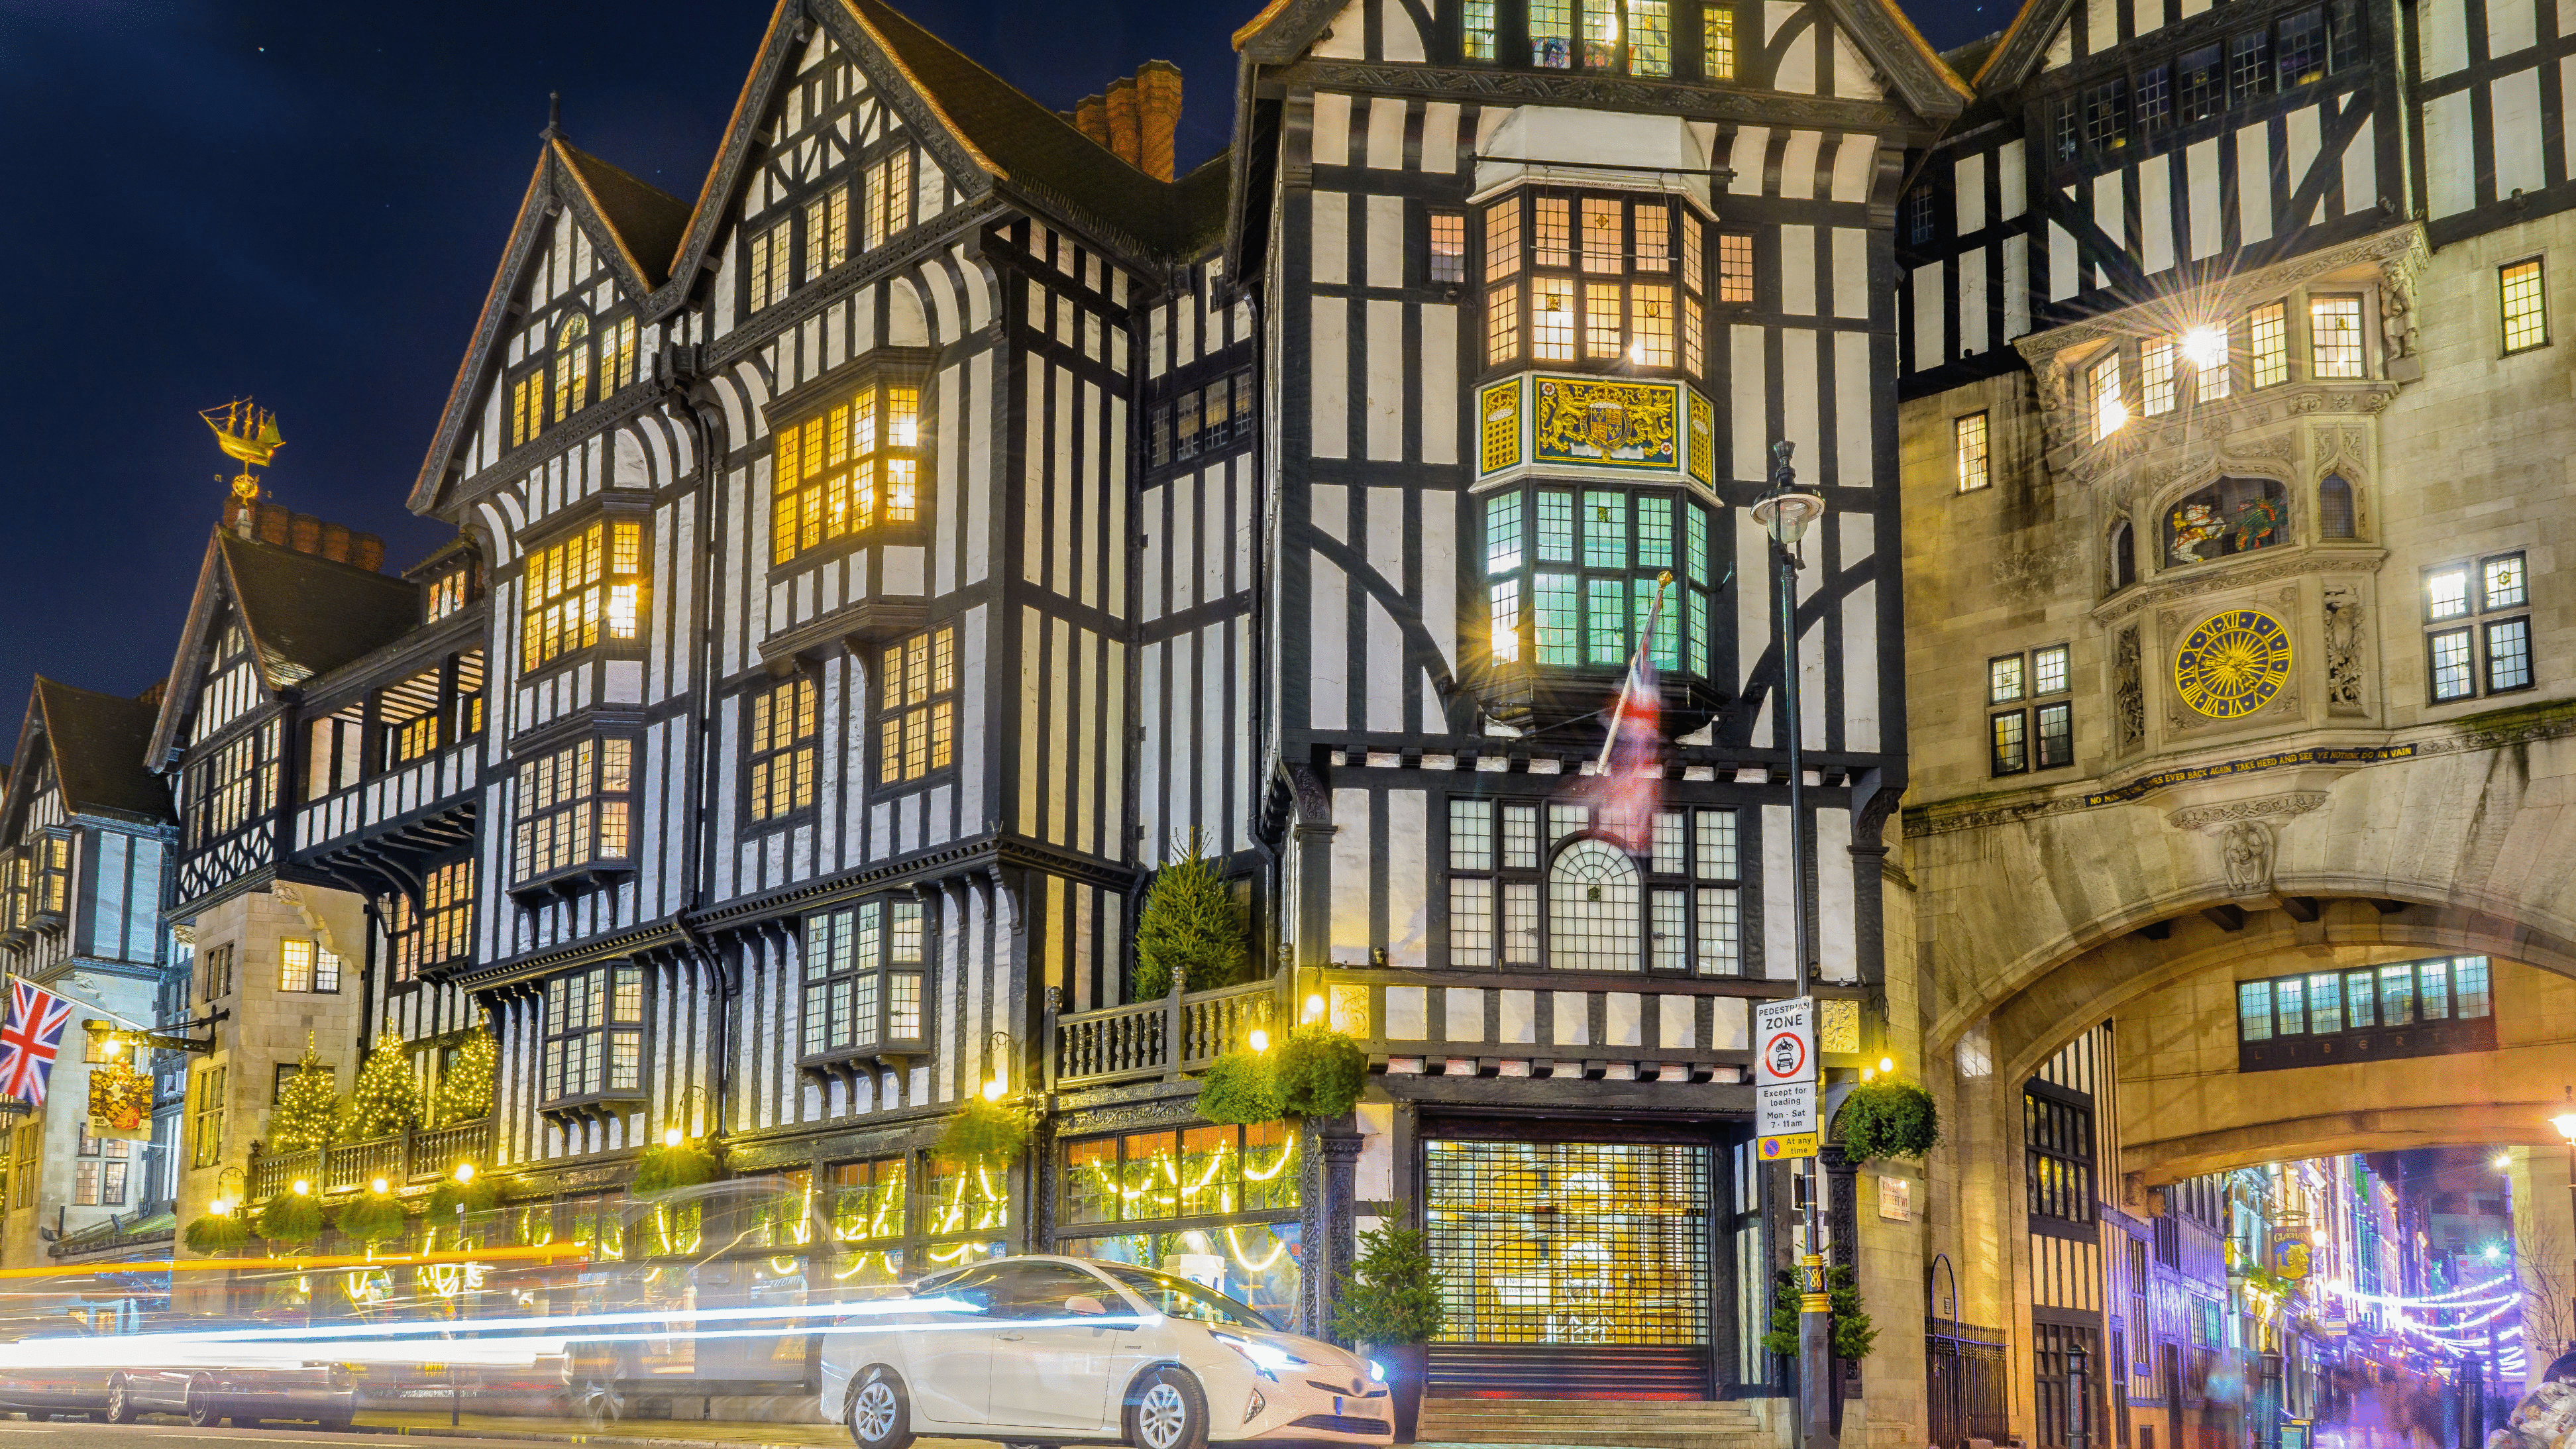 Liberty London's Tudor-revival building illuminated at night